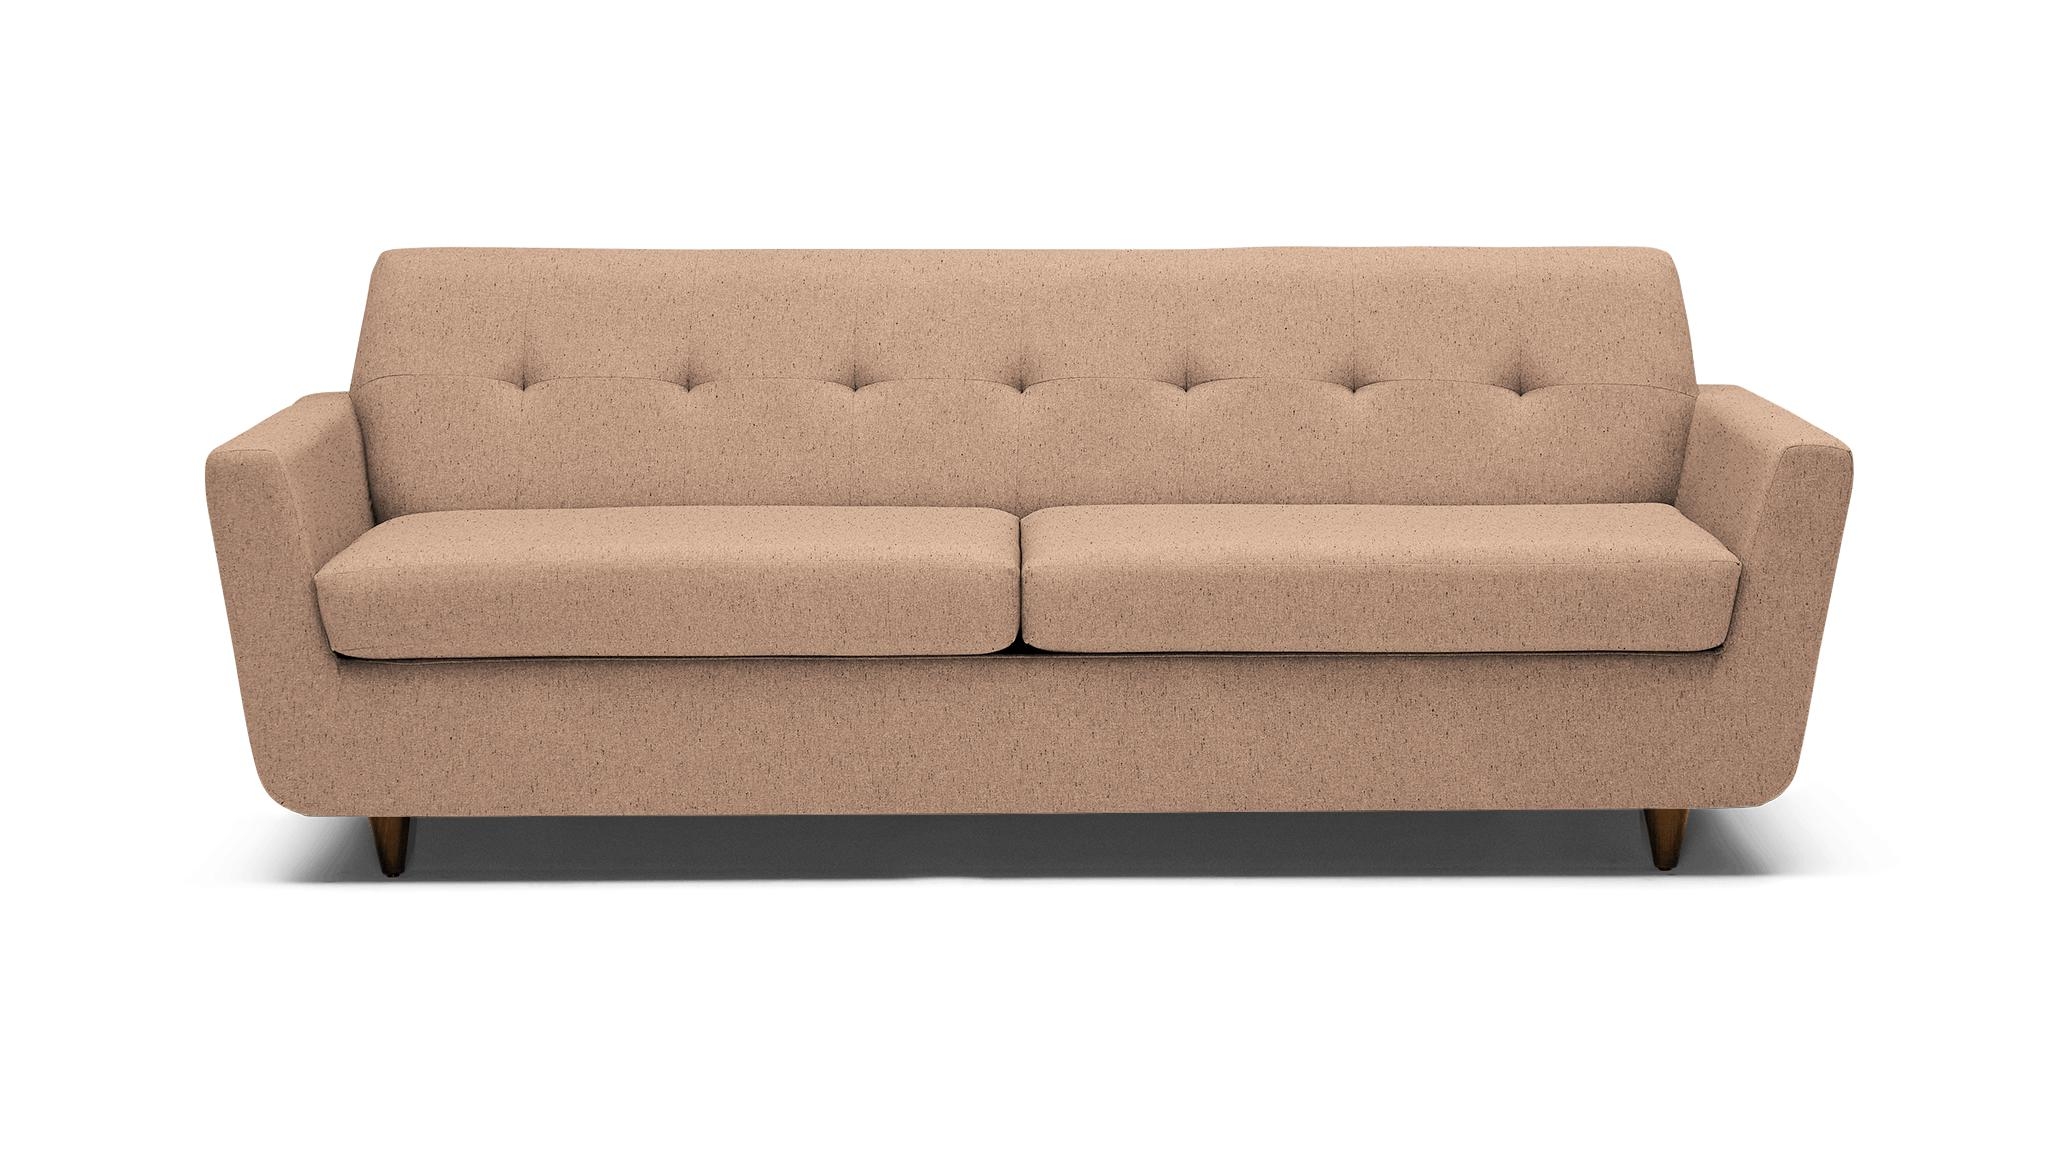 Pink Hughes Mid Century Modern Sleeper Sofa - Royale Blush - Mocha - Image 0